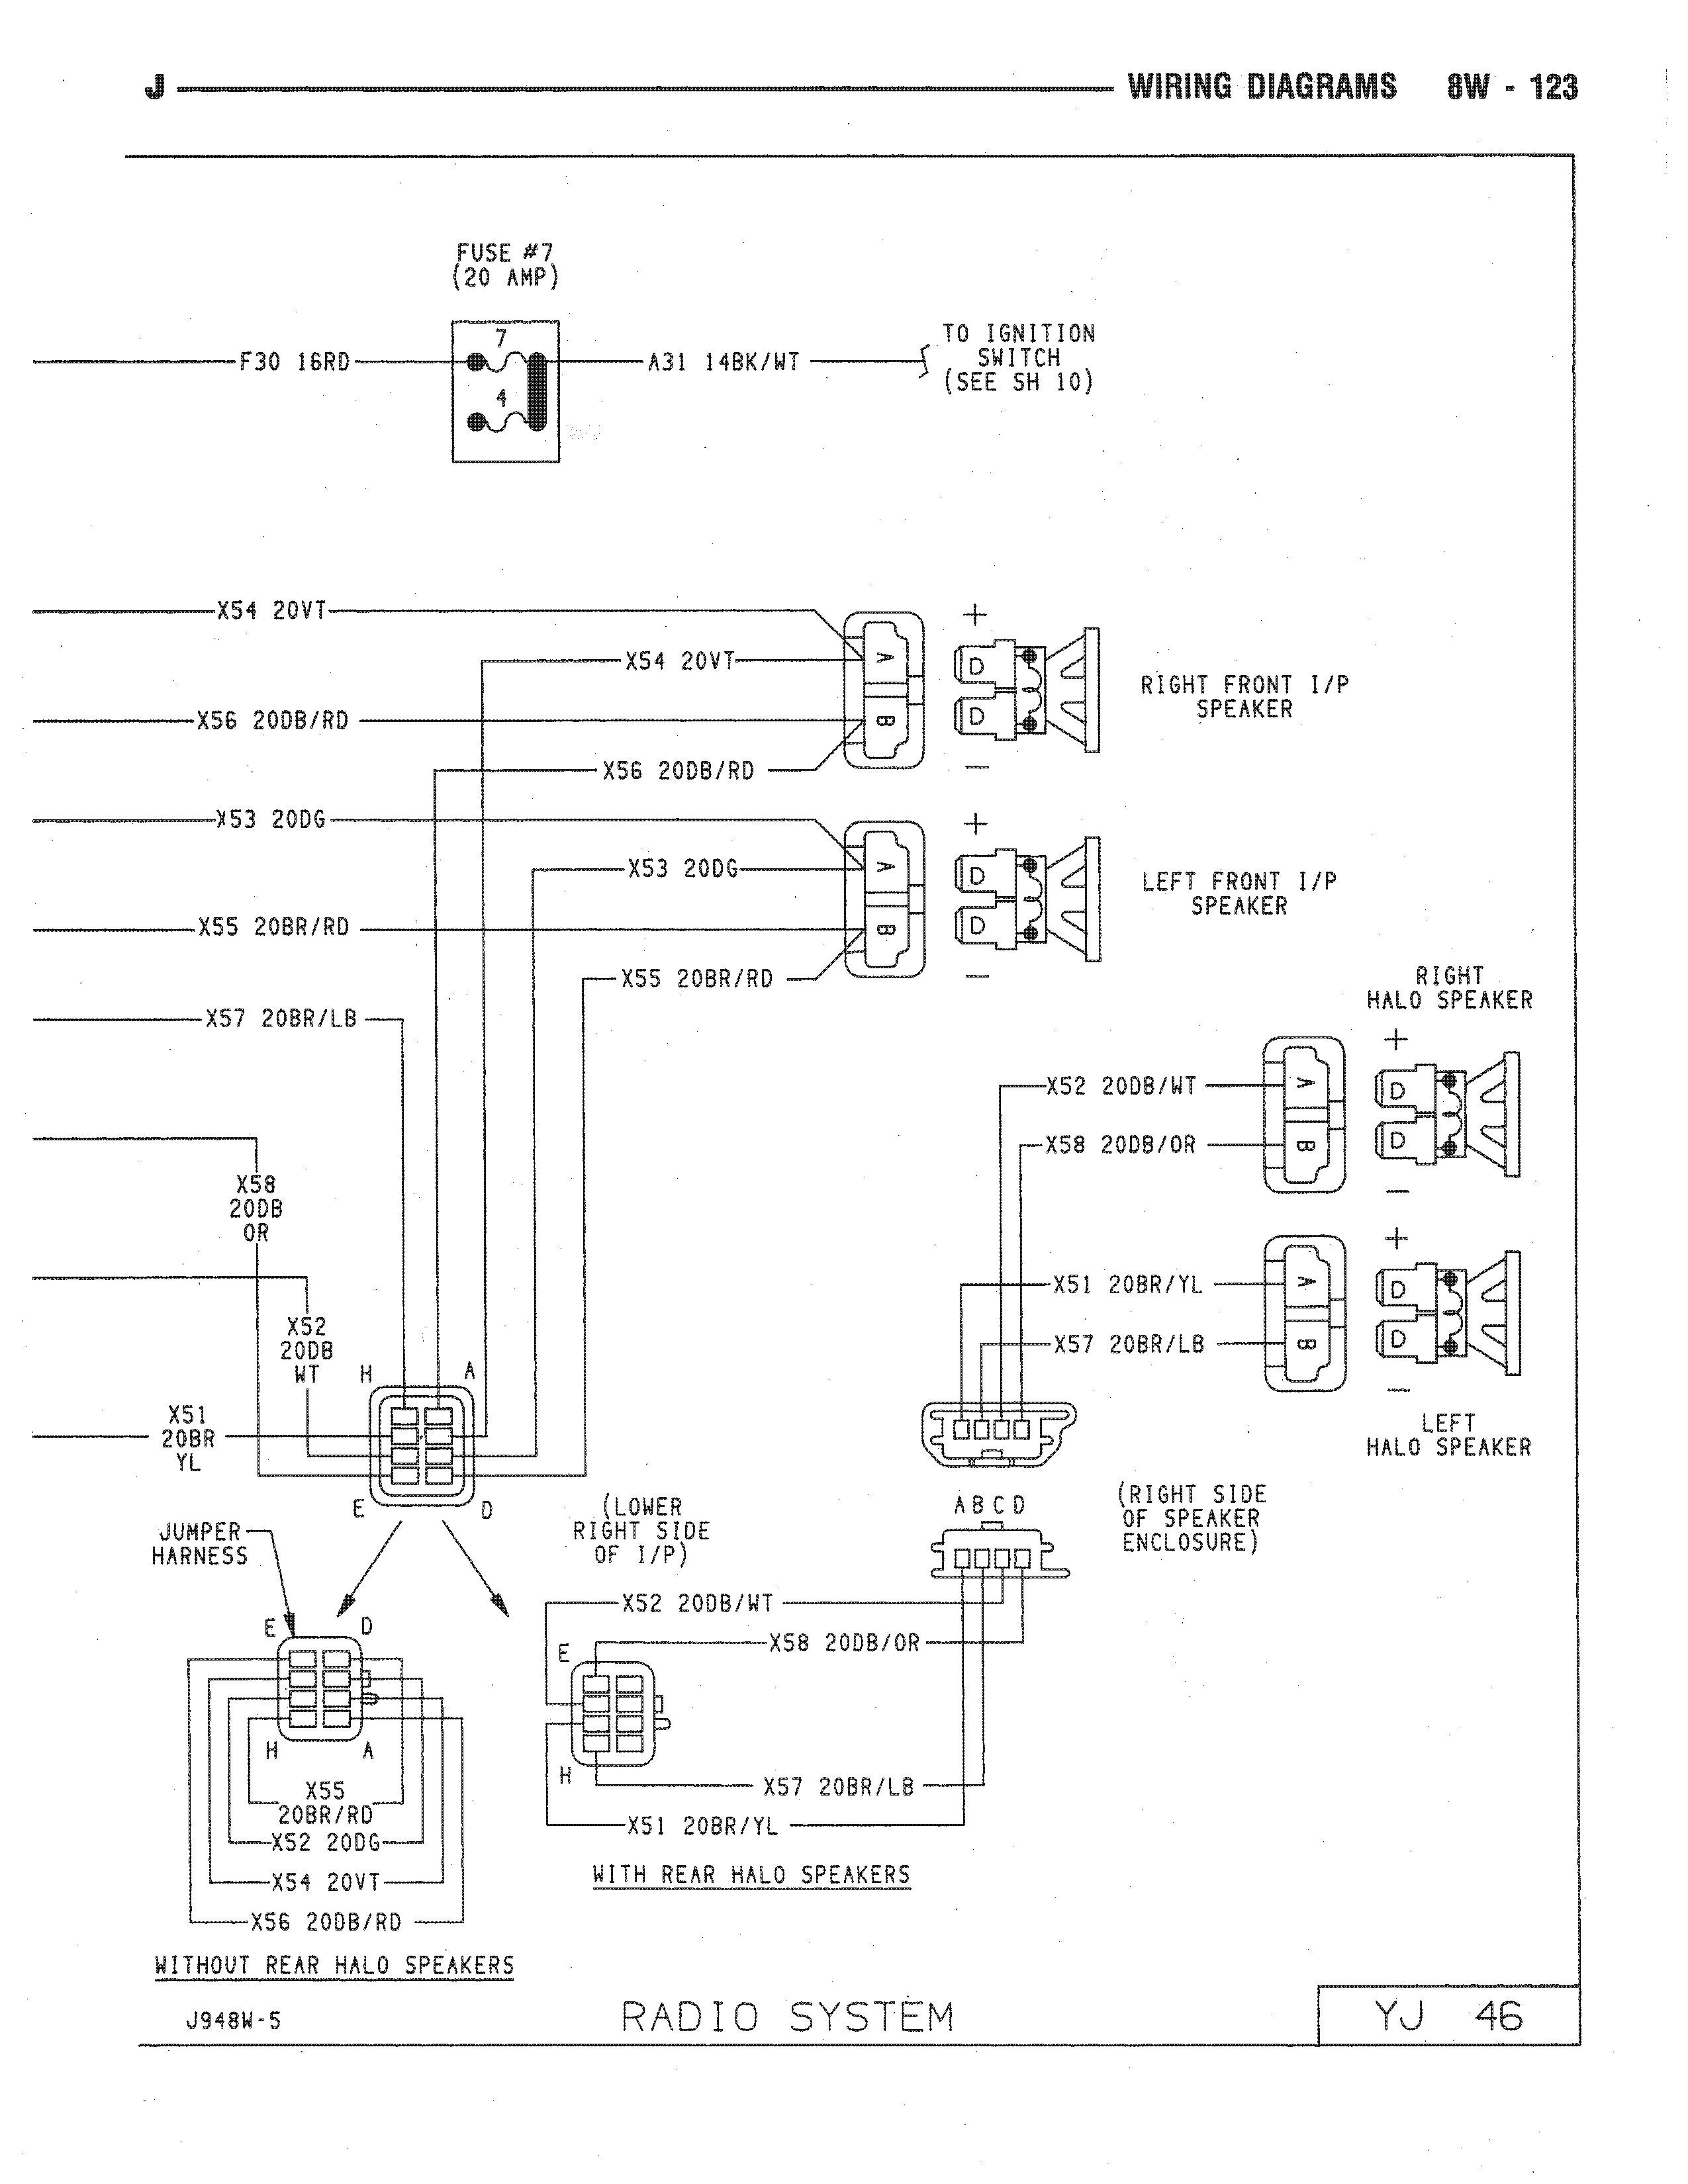 1997 Saturn Sl1 Engine Diagram 1997 Saturn Sl1 Wiring Diagram Saturn Wiring Diagrams Instructions Of 1997 Saturn Sl1 Engine Diagram